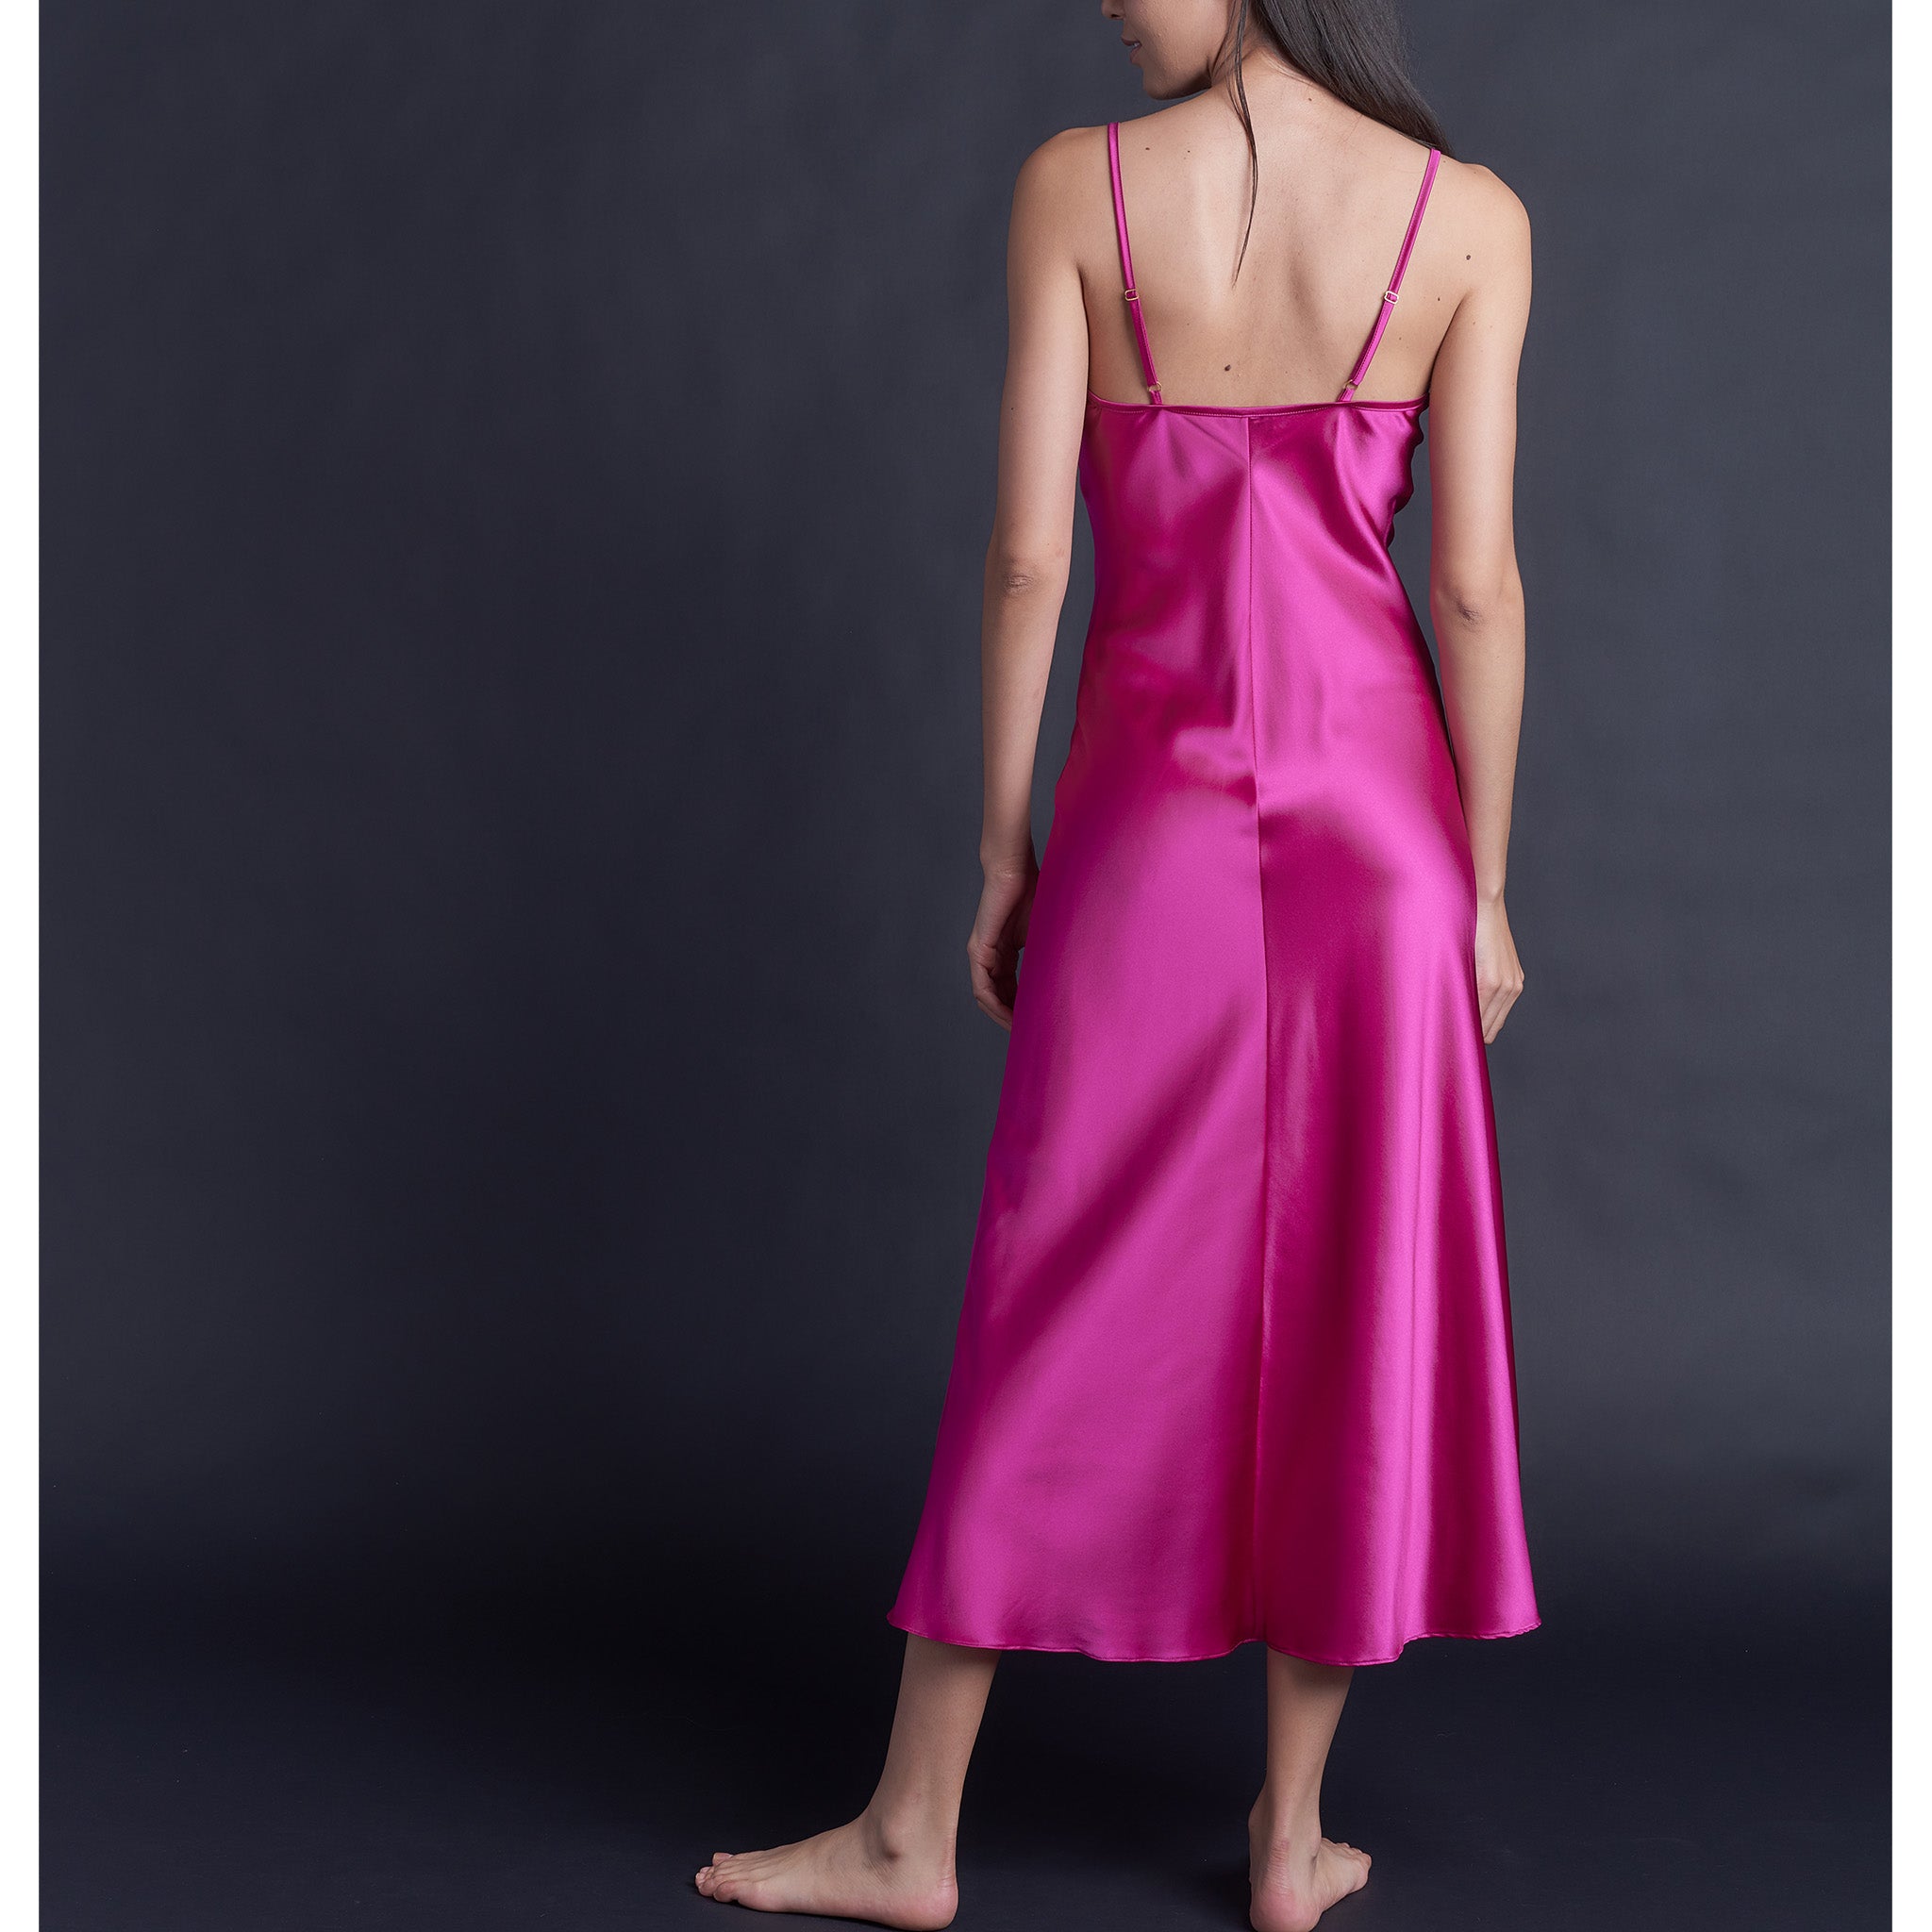 Juno Slip Dress in Rubellite Stretch Silk Charmeuse